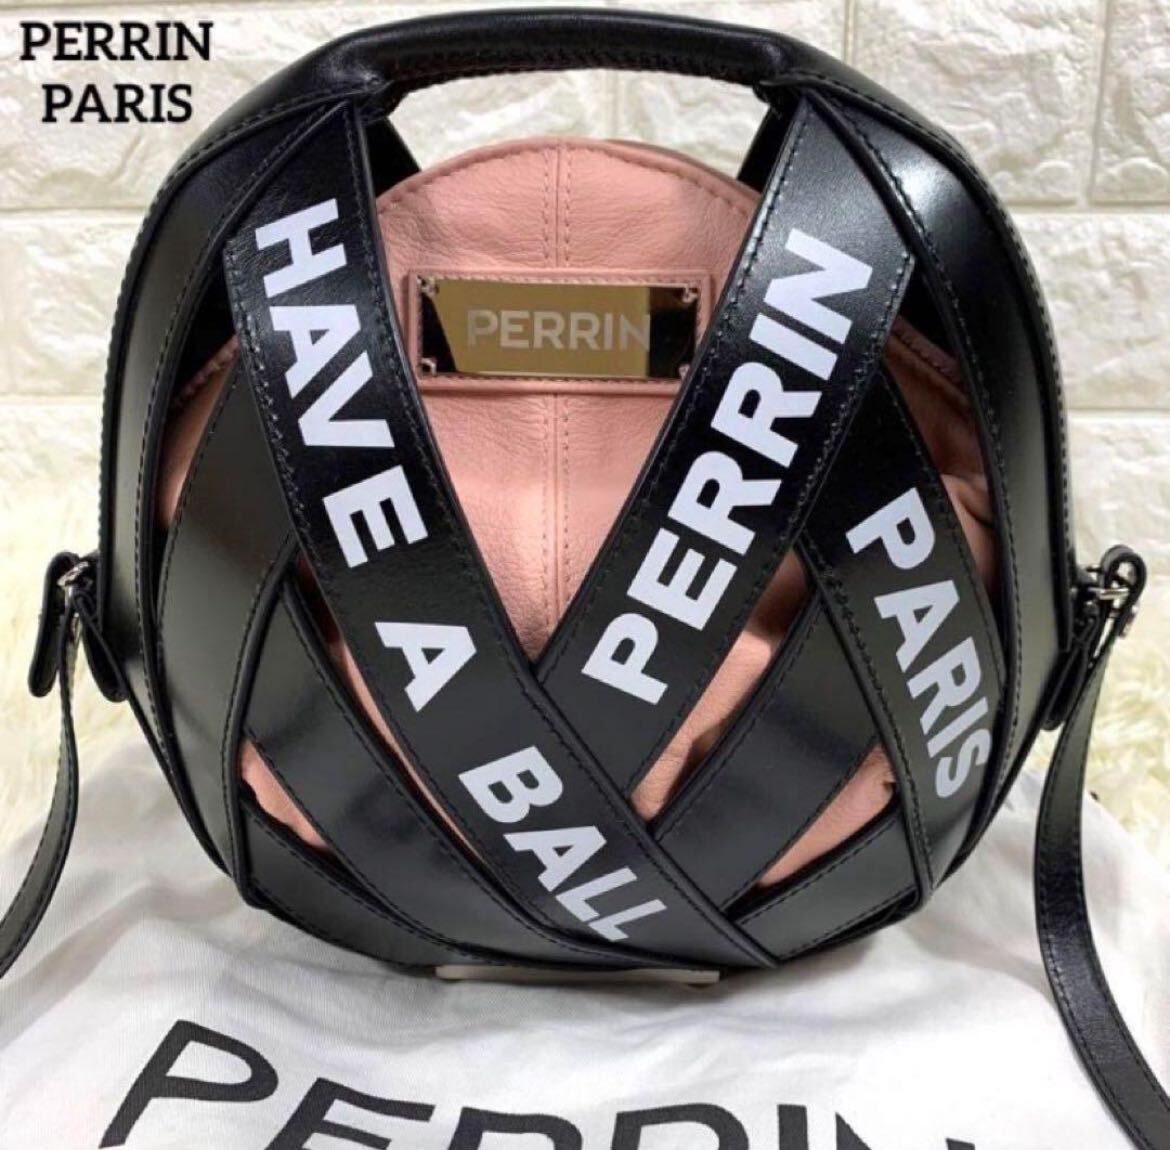  превосходный товар Perrin Paris винт n Париж сумка на плечо LE PETIT PANIER кринолин редкий 